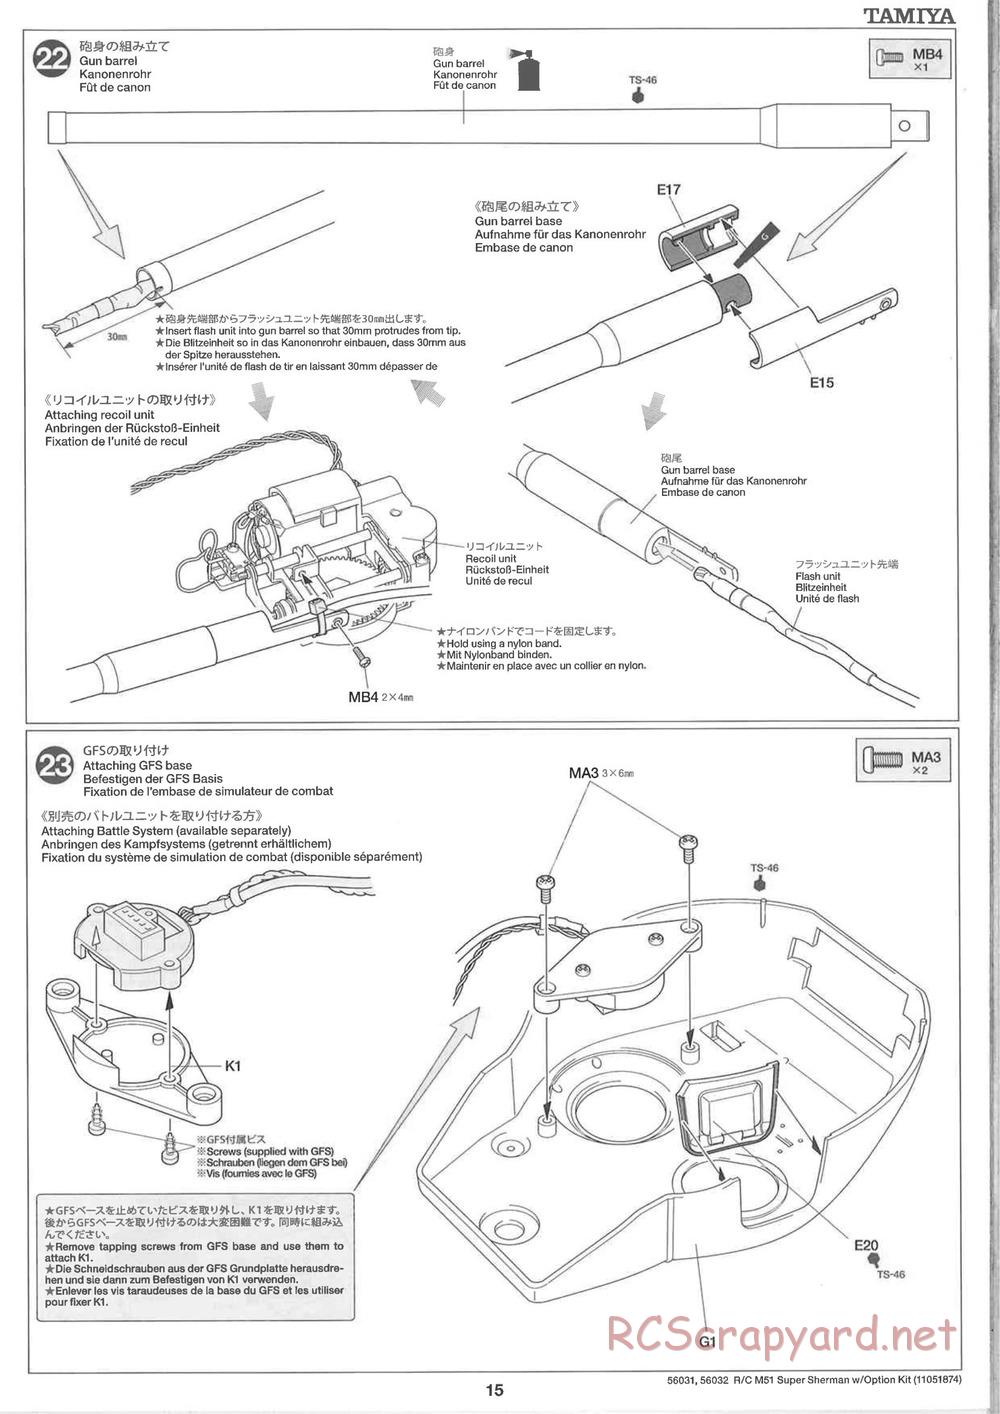 Tamiya - Super Sherman M-51 - 1/16 Scale Chassis - Manual - Page 15